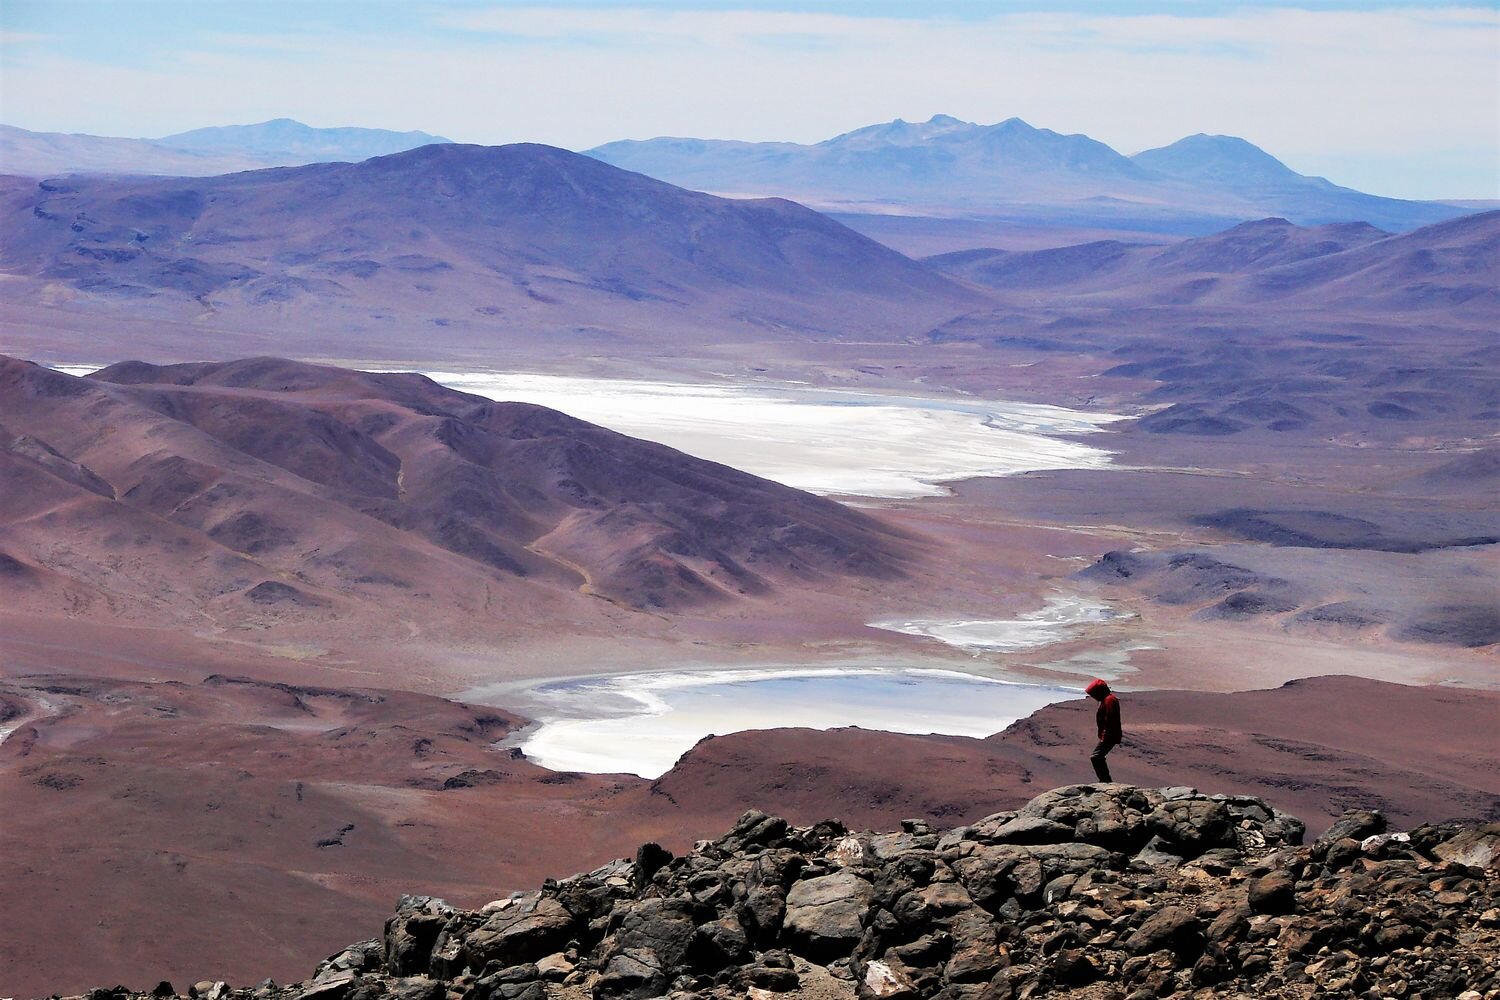  An acclimatizing hike in the Chilean altiplano. Atacama, Chile 